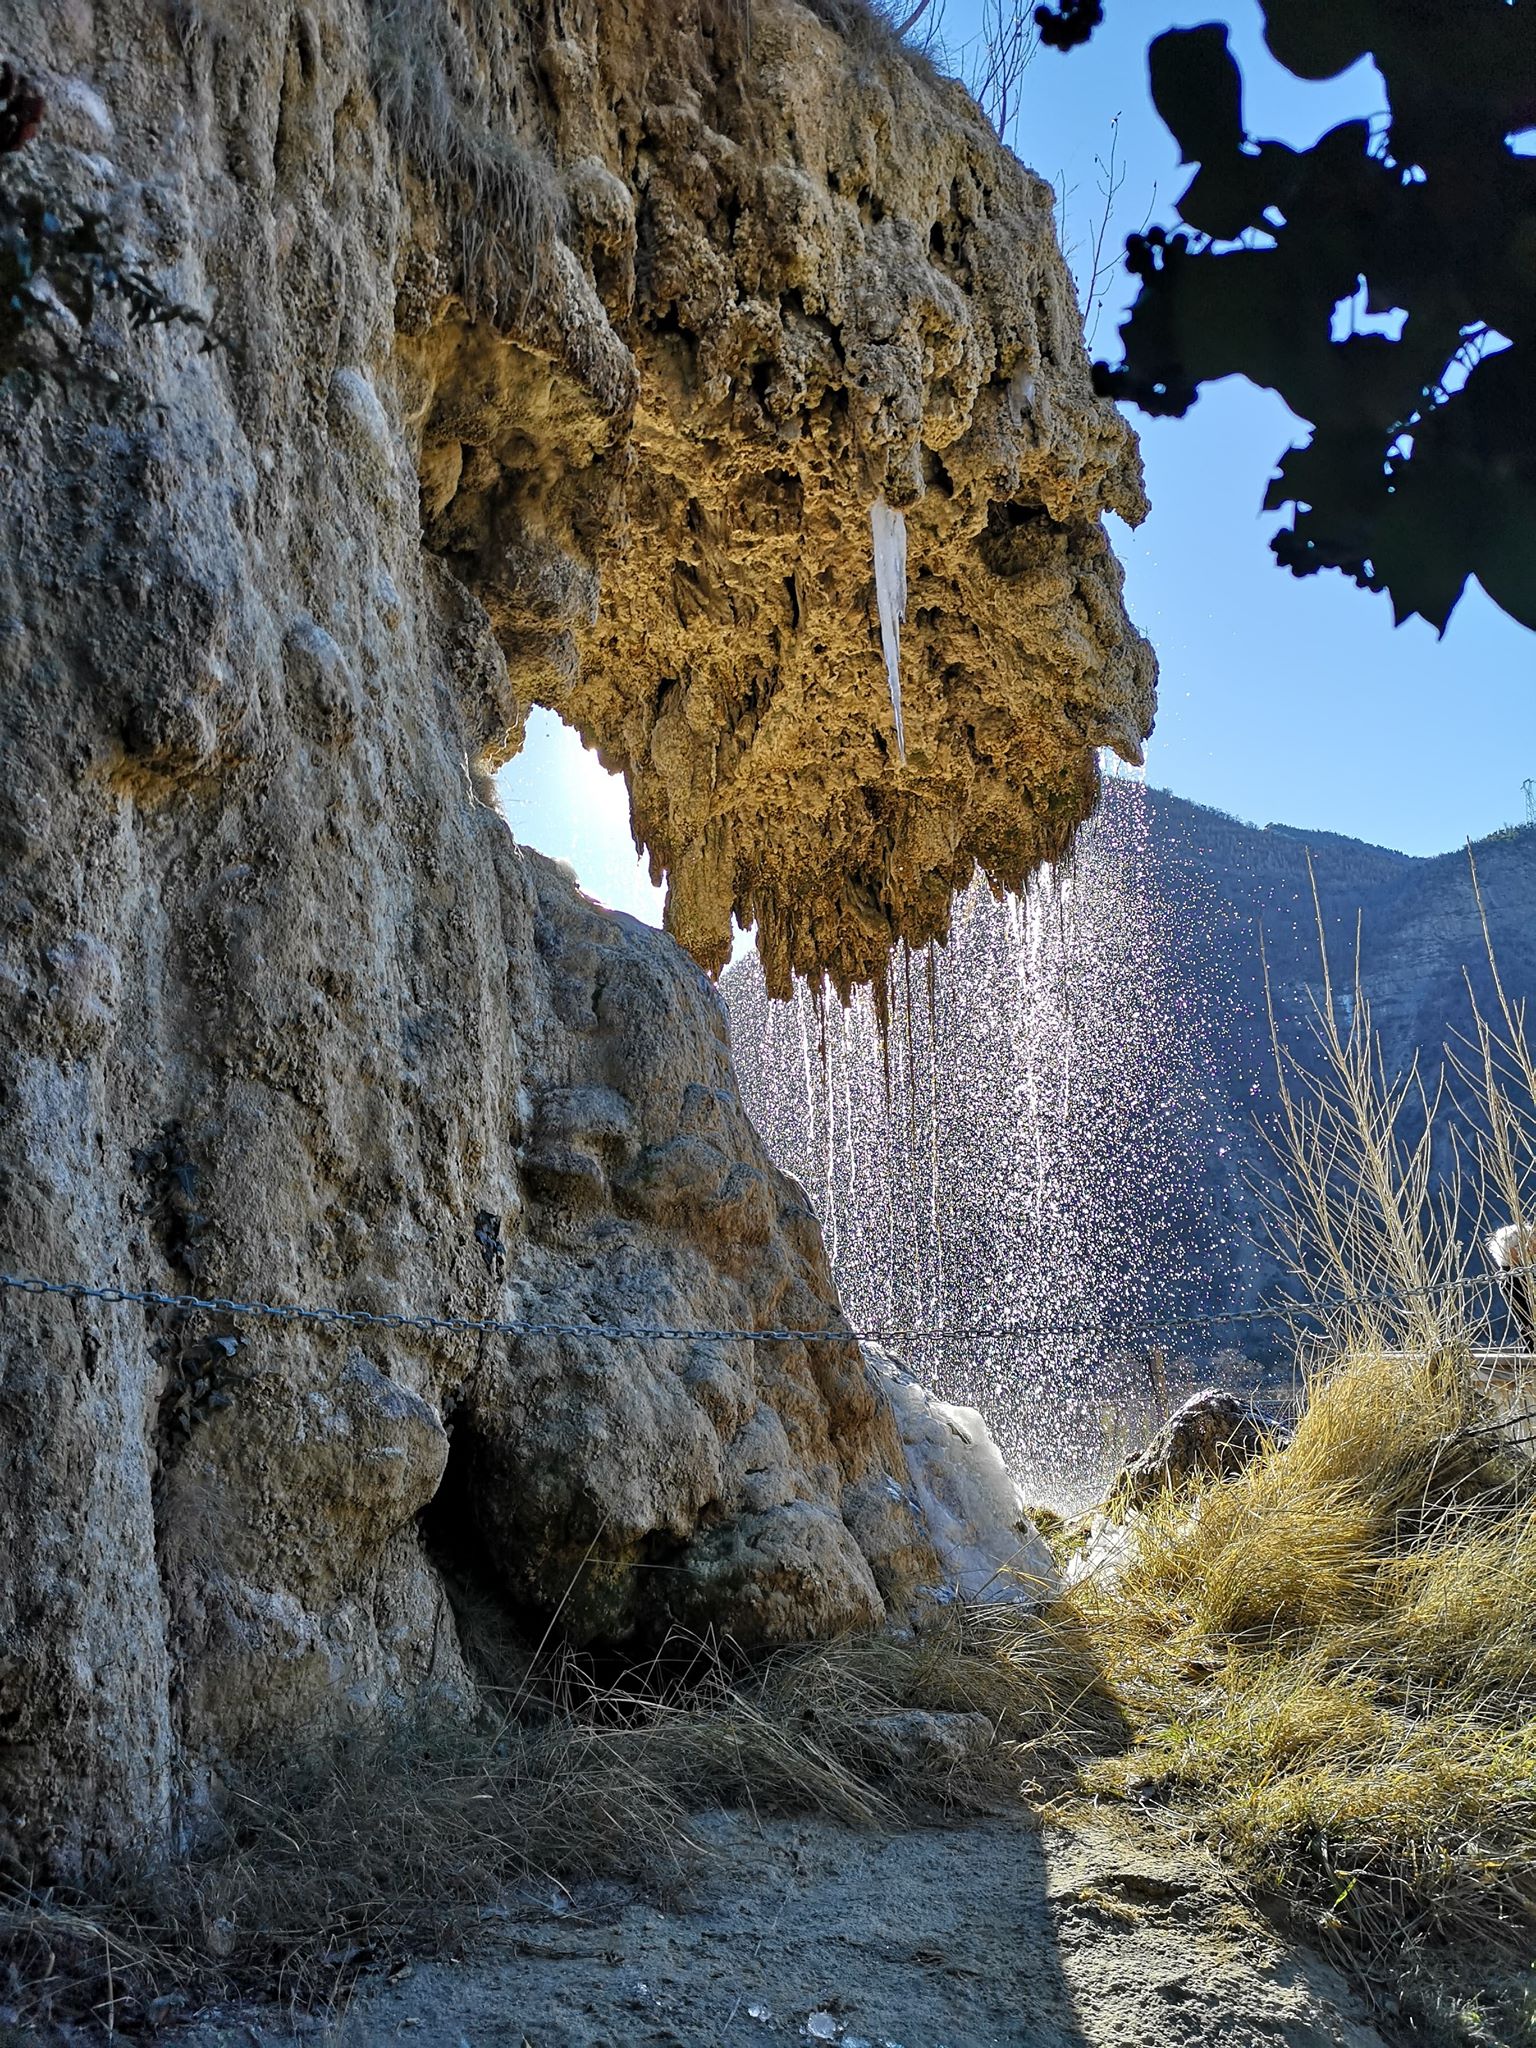 The petrifying waterfalls of Remollon